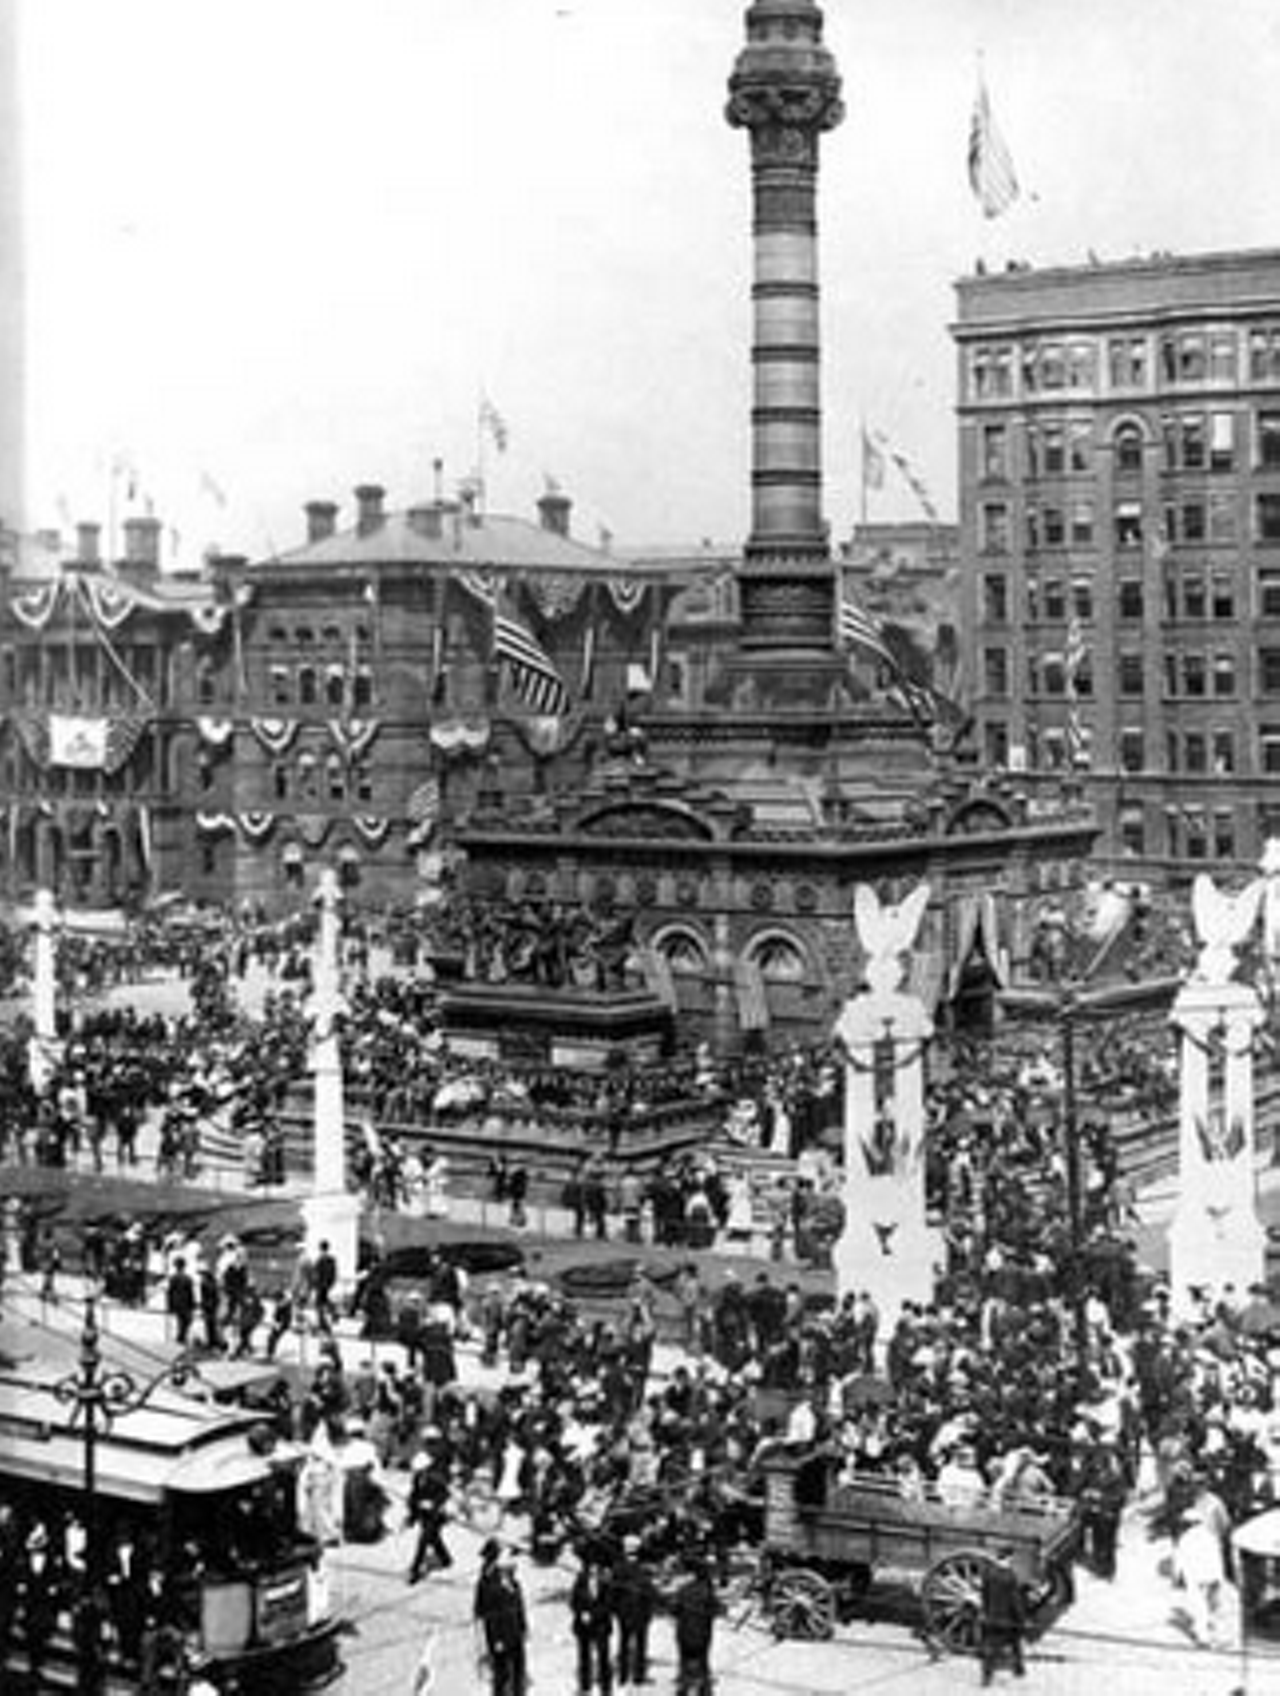 20 Historic Photos of Cleveland's Public Square